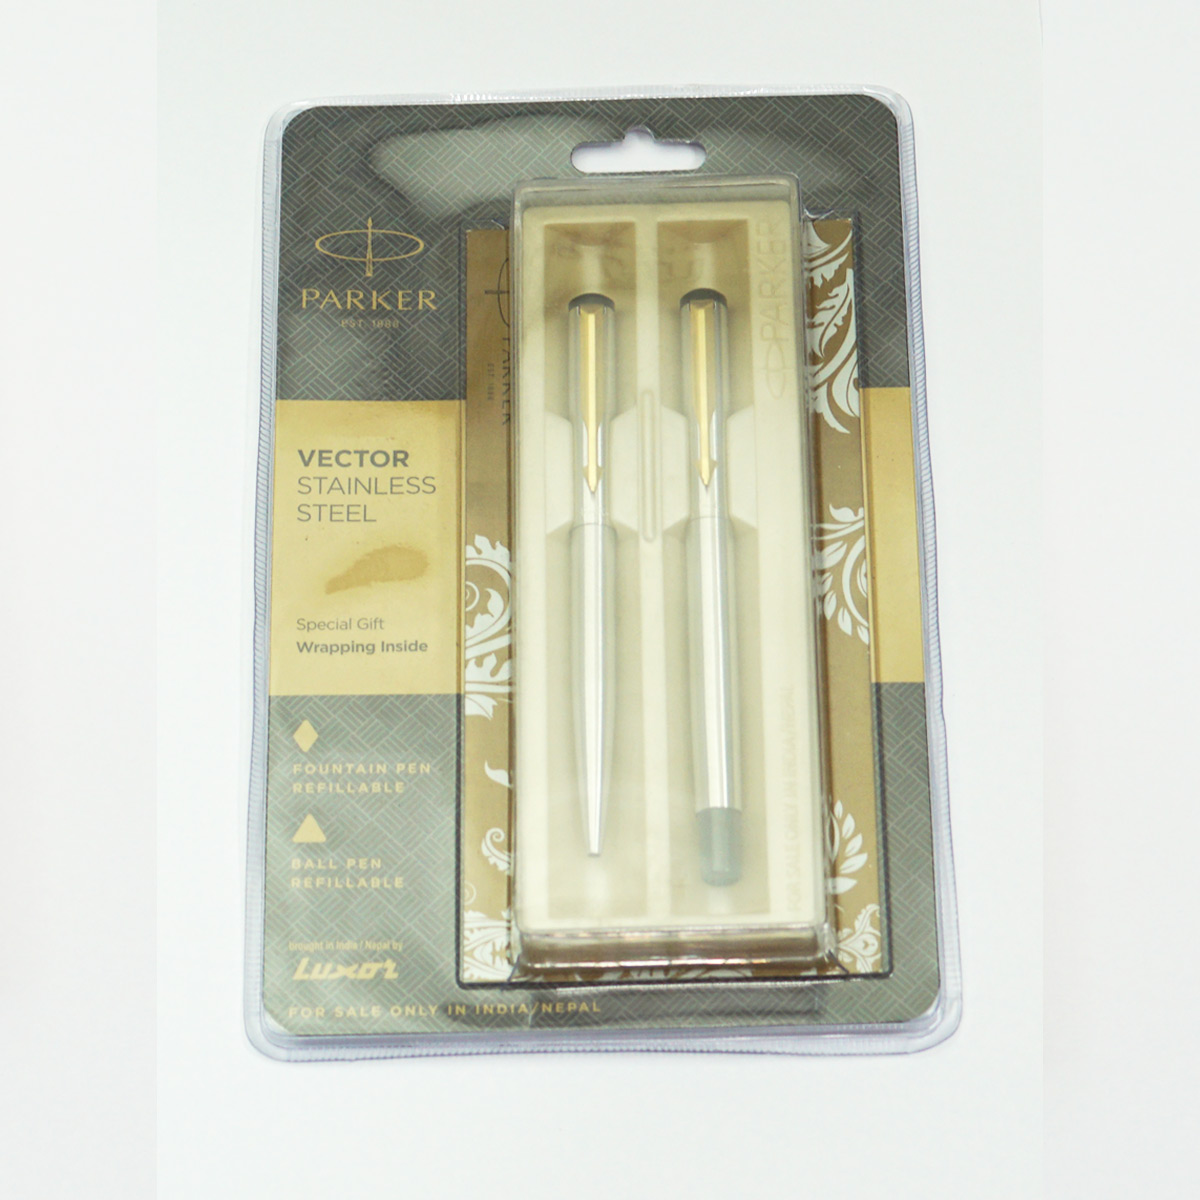 Parker Vector Full Silver Color Body With Golden Color Clip Fountain Pen With Ball Pen Gift Set SKU 23259